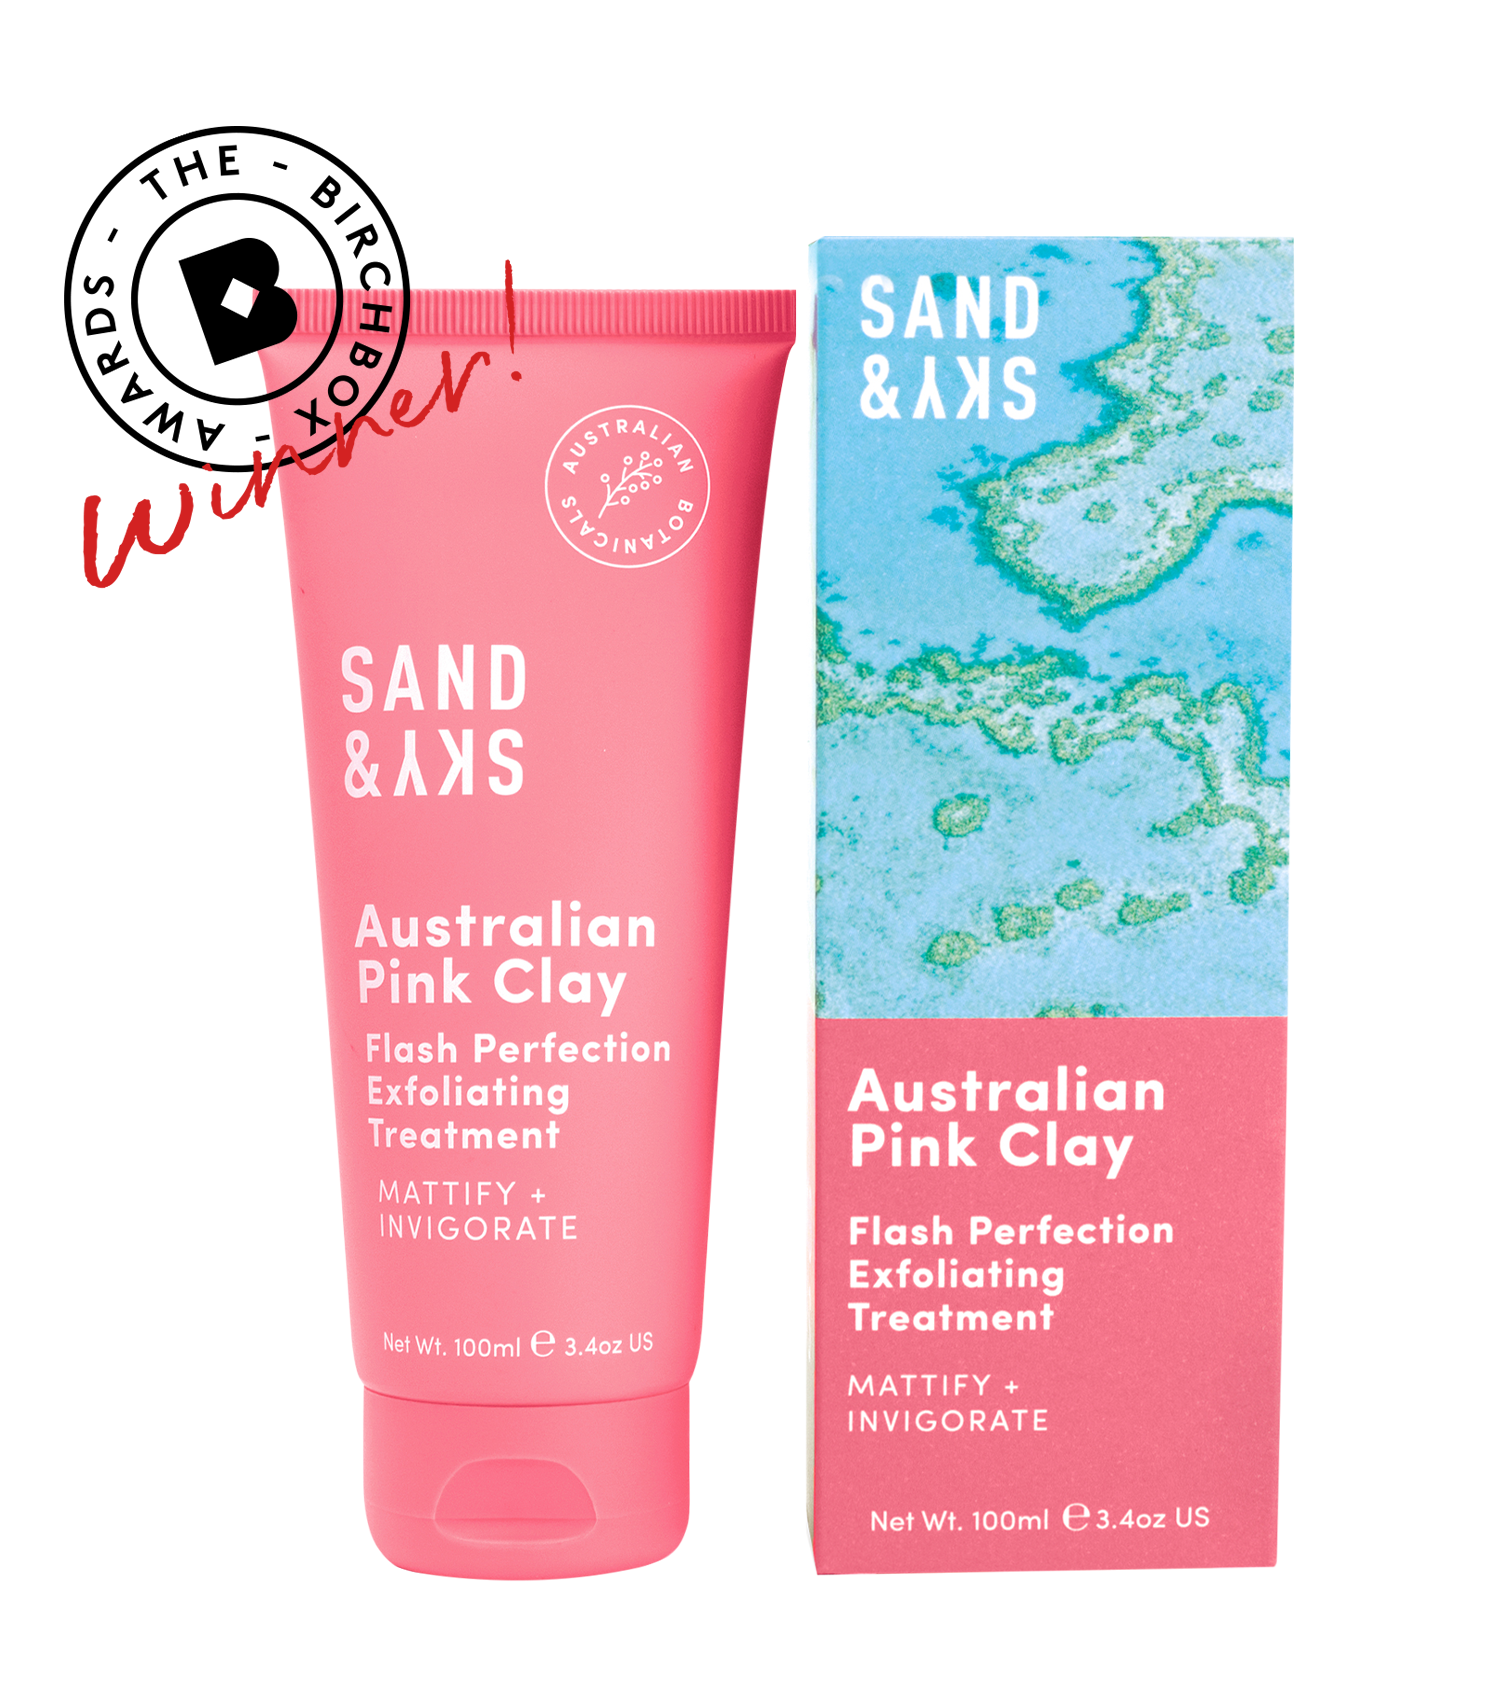 SAND & SKY Australian Pink Clay - Flash Perfection Exfoliating Treatment